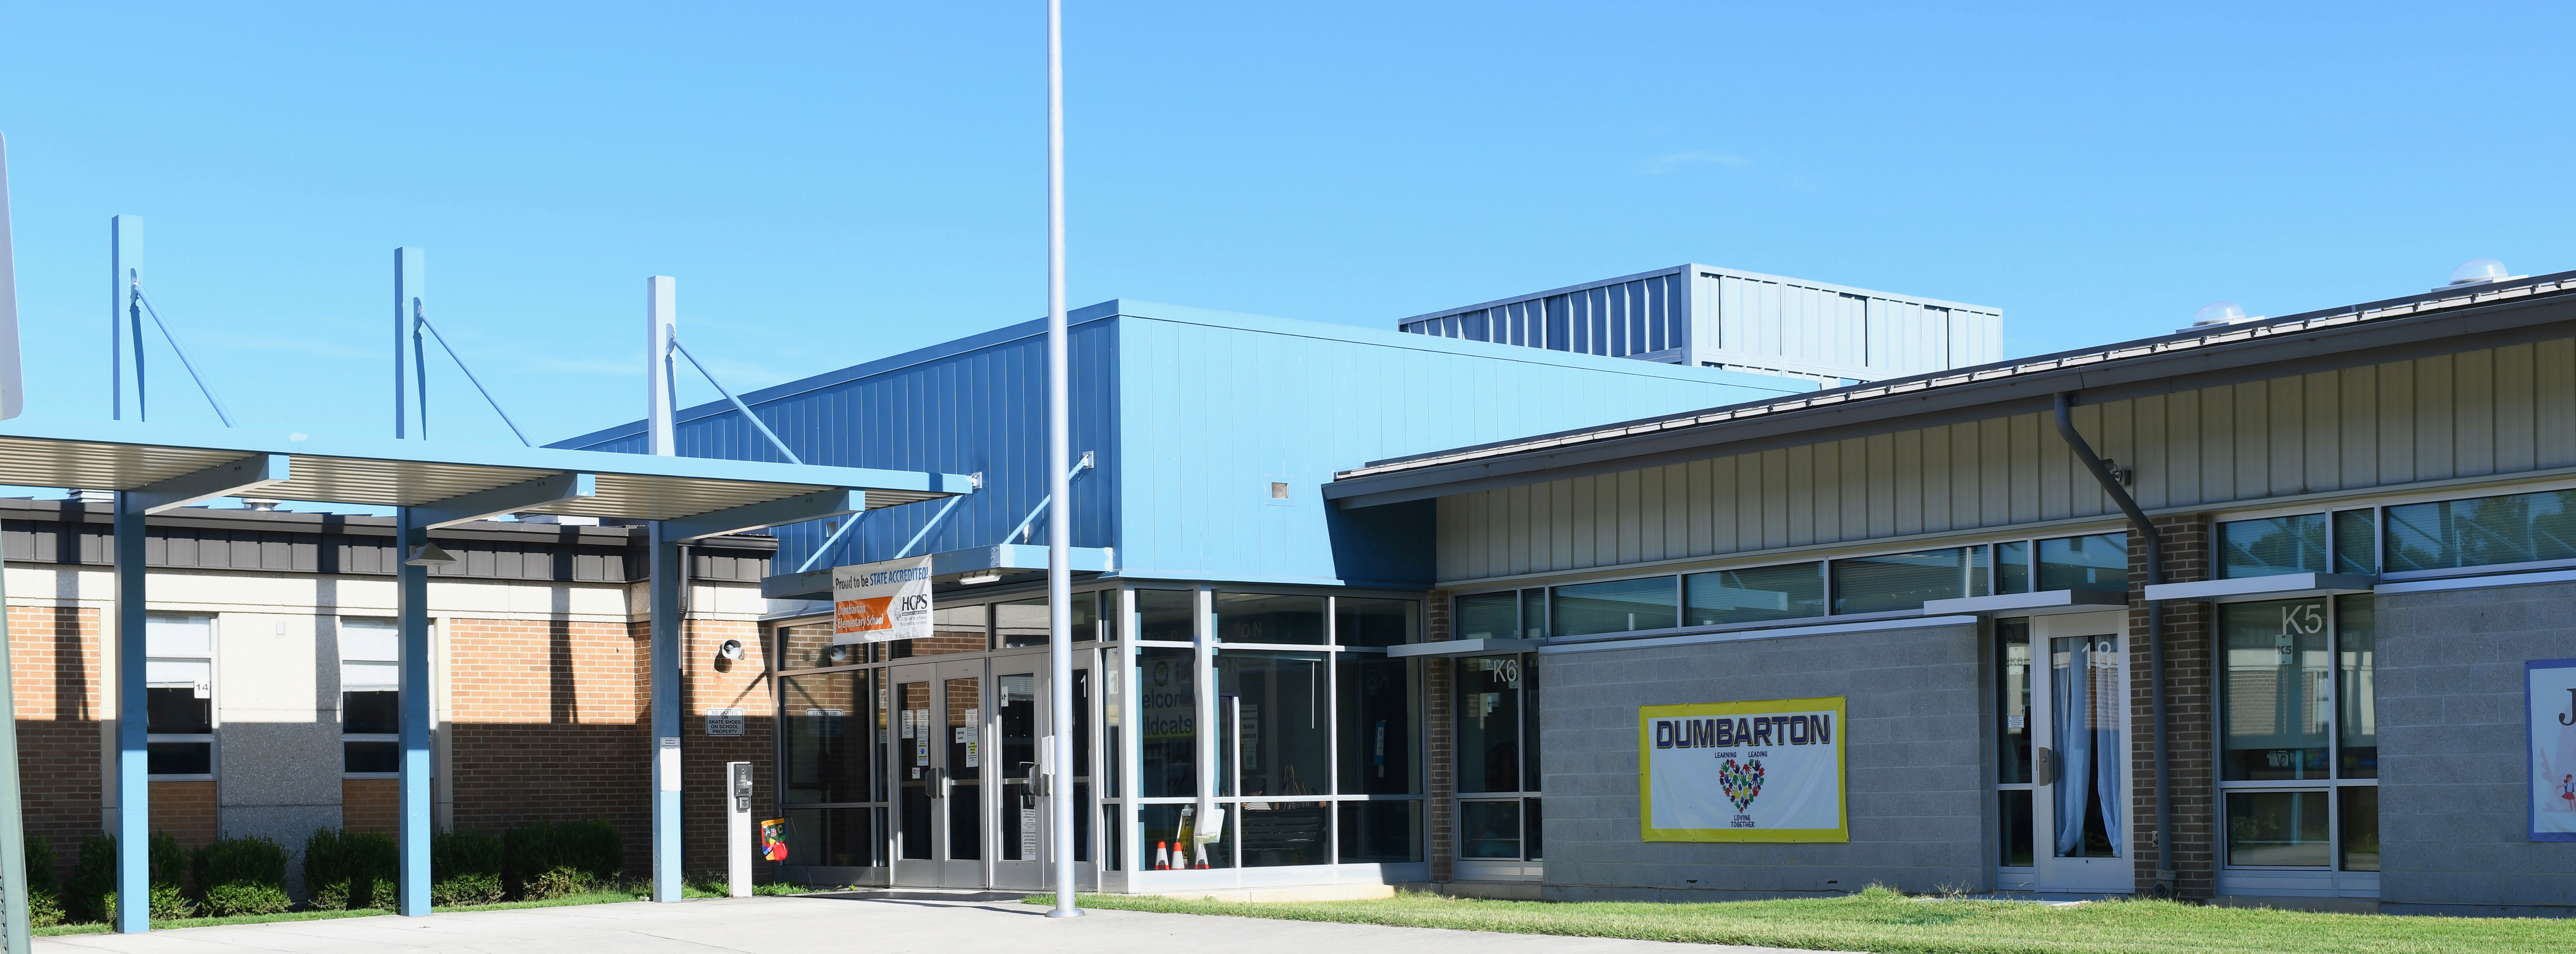 Dumbarton Elementary School exterior